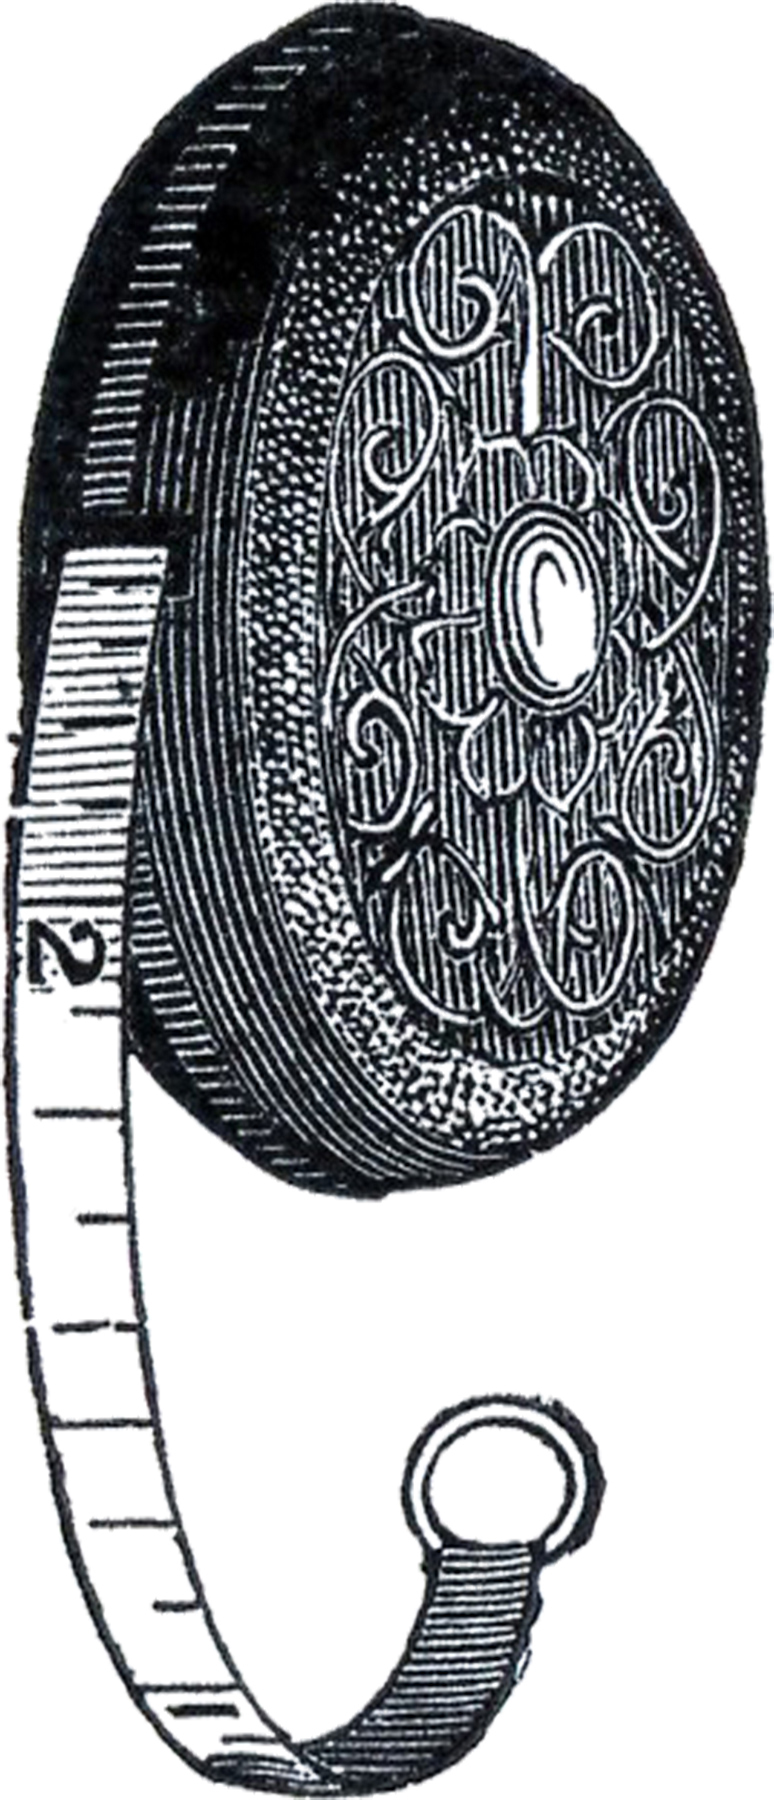 measuring tape clip art